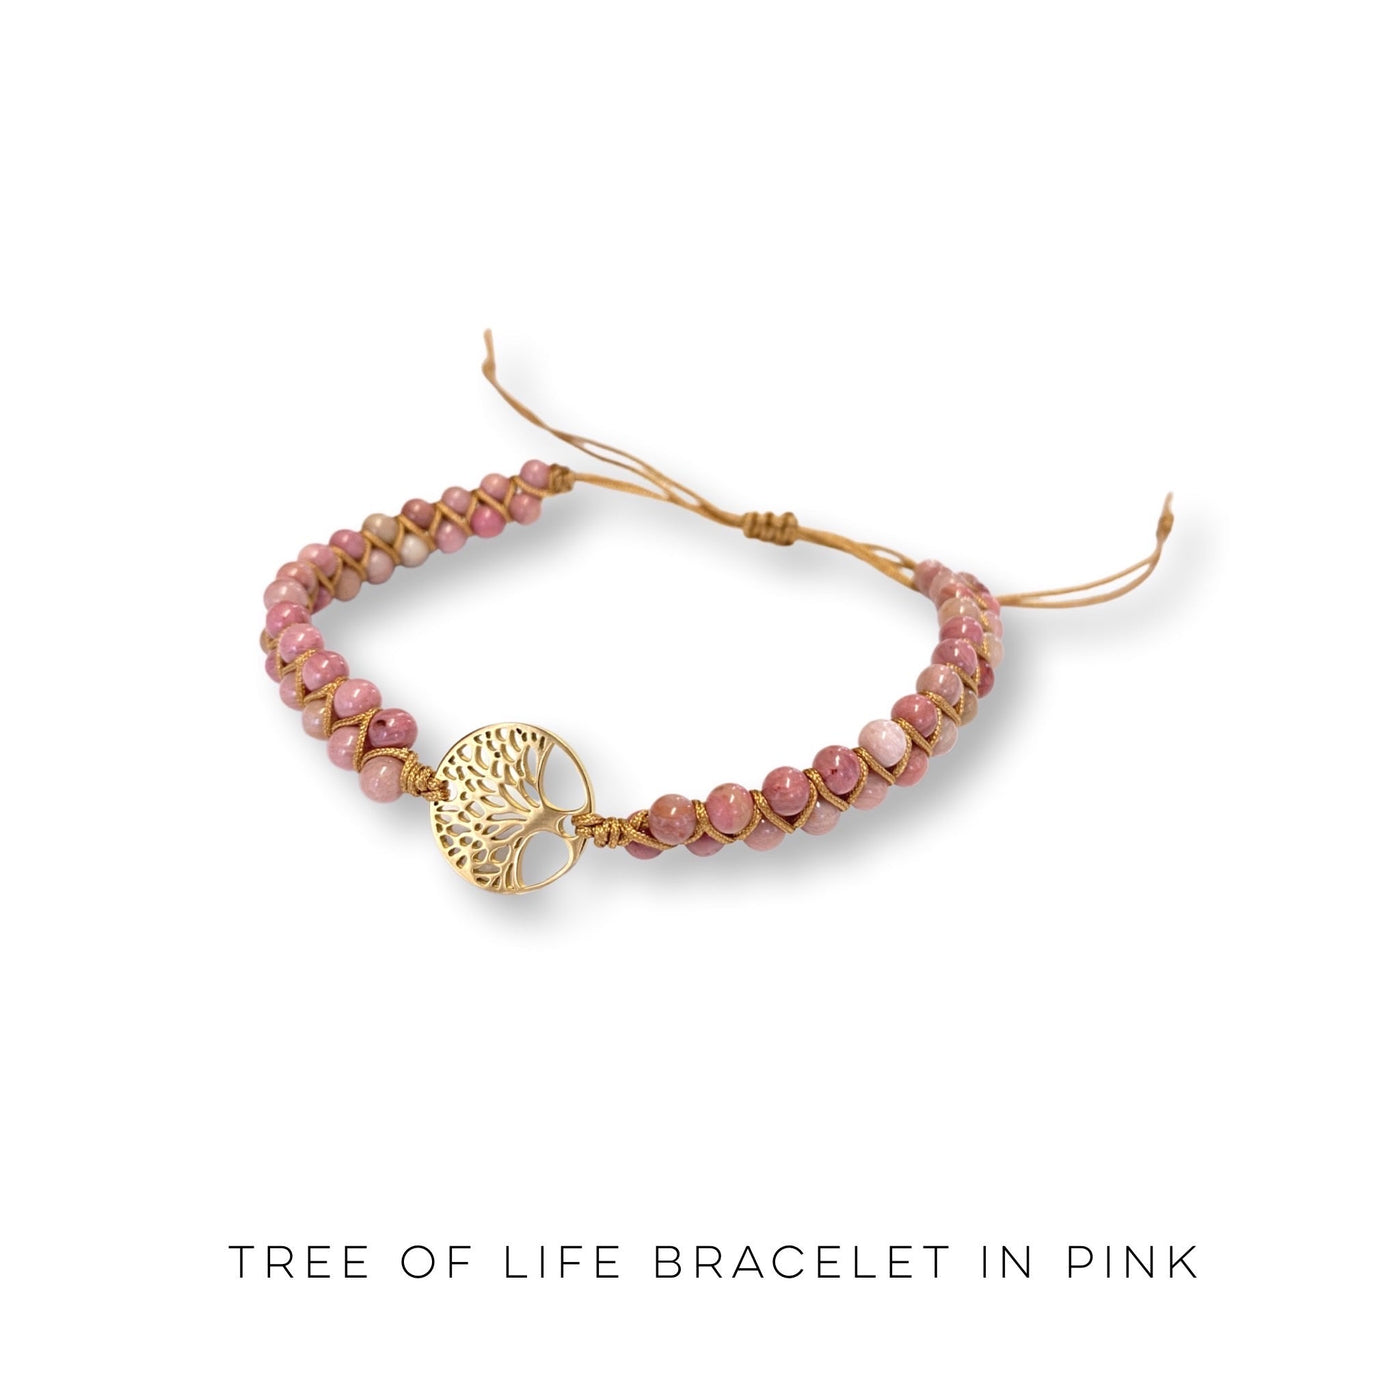 Tree of Life Bracelet in Pink - Copper + Rose